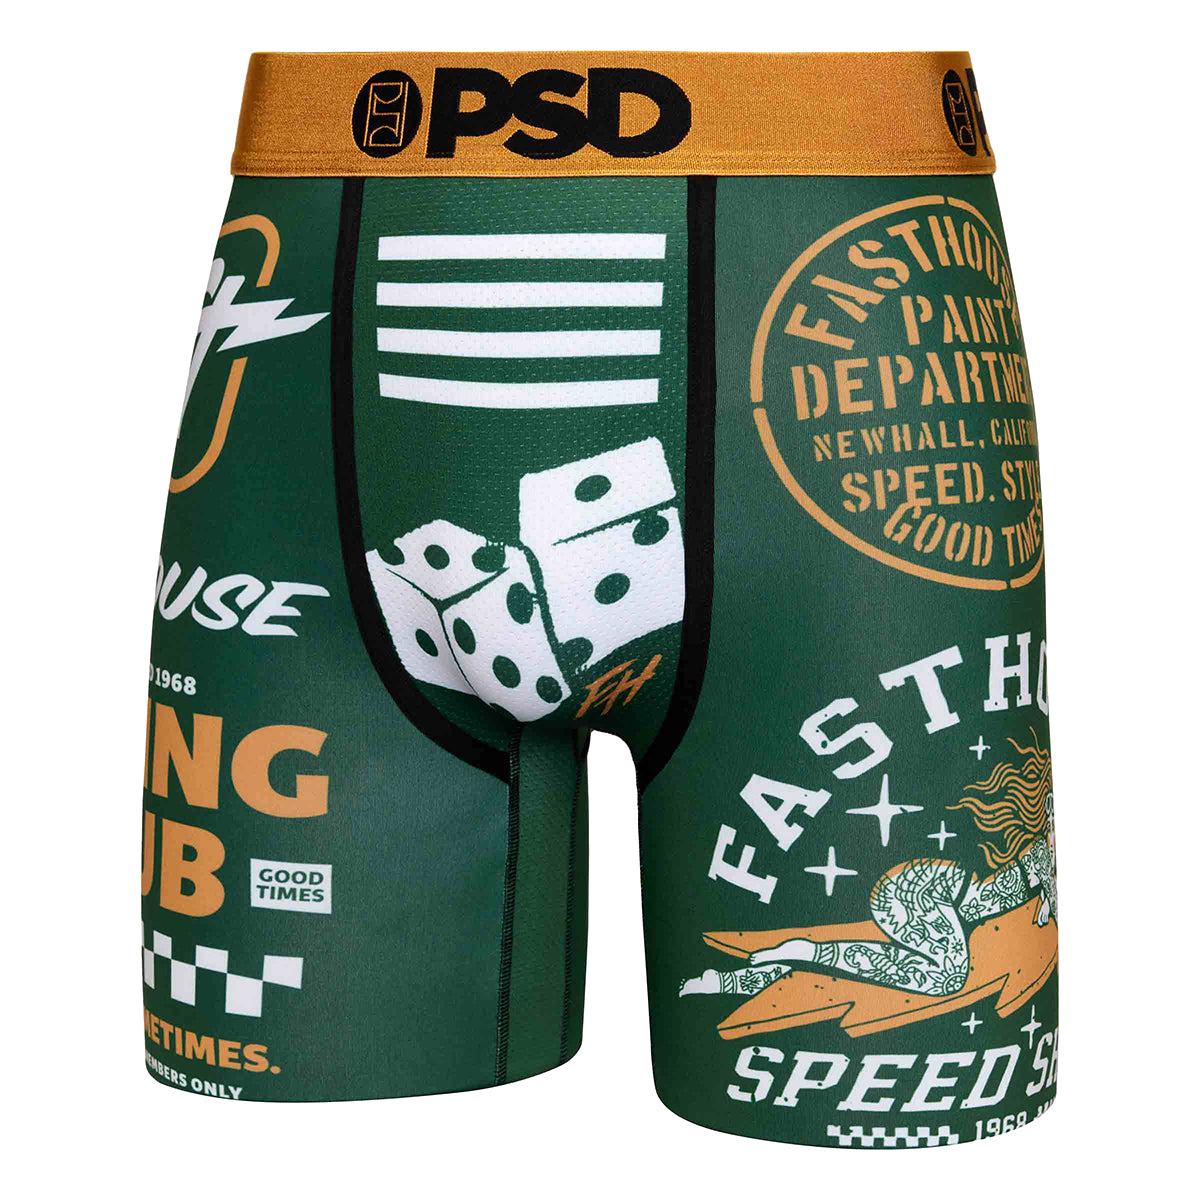 Fasthouse x PSD Paradigm Underwear